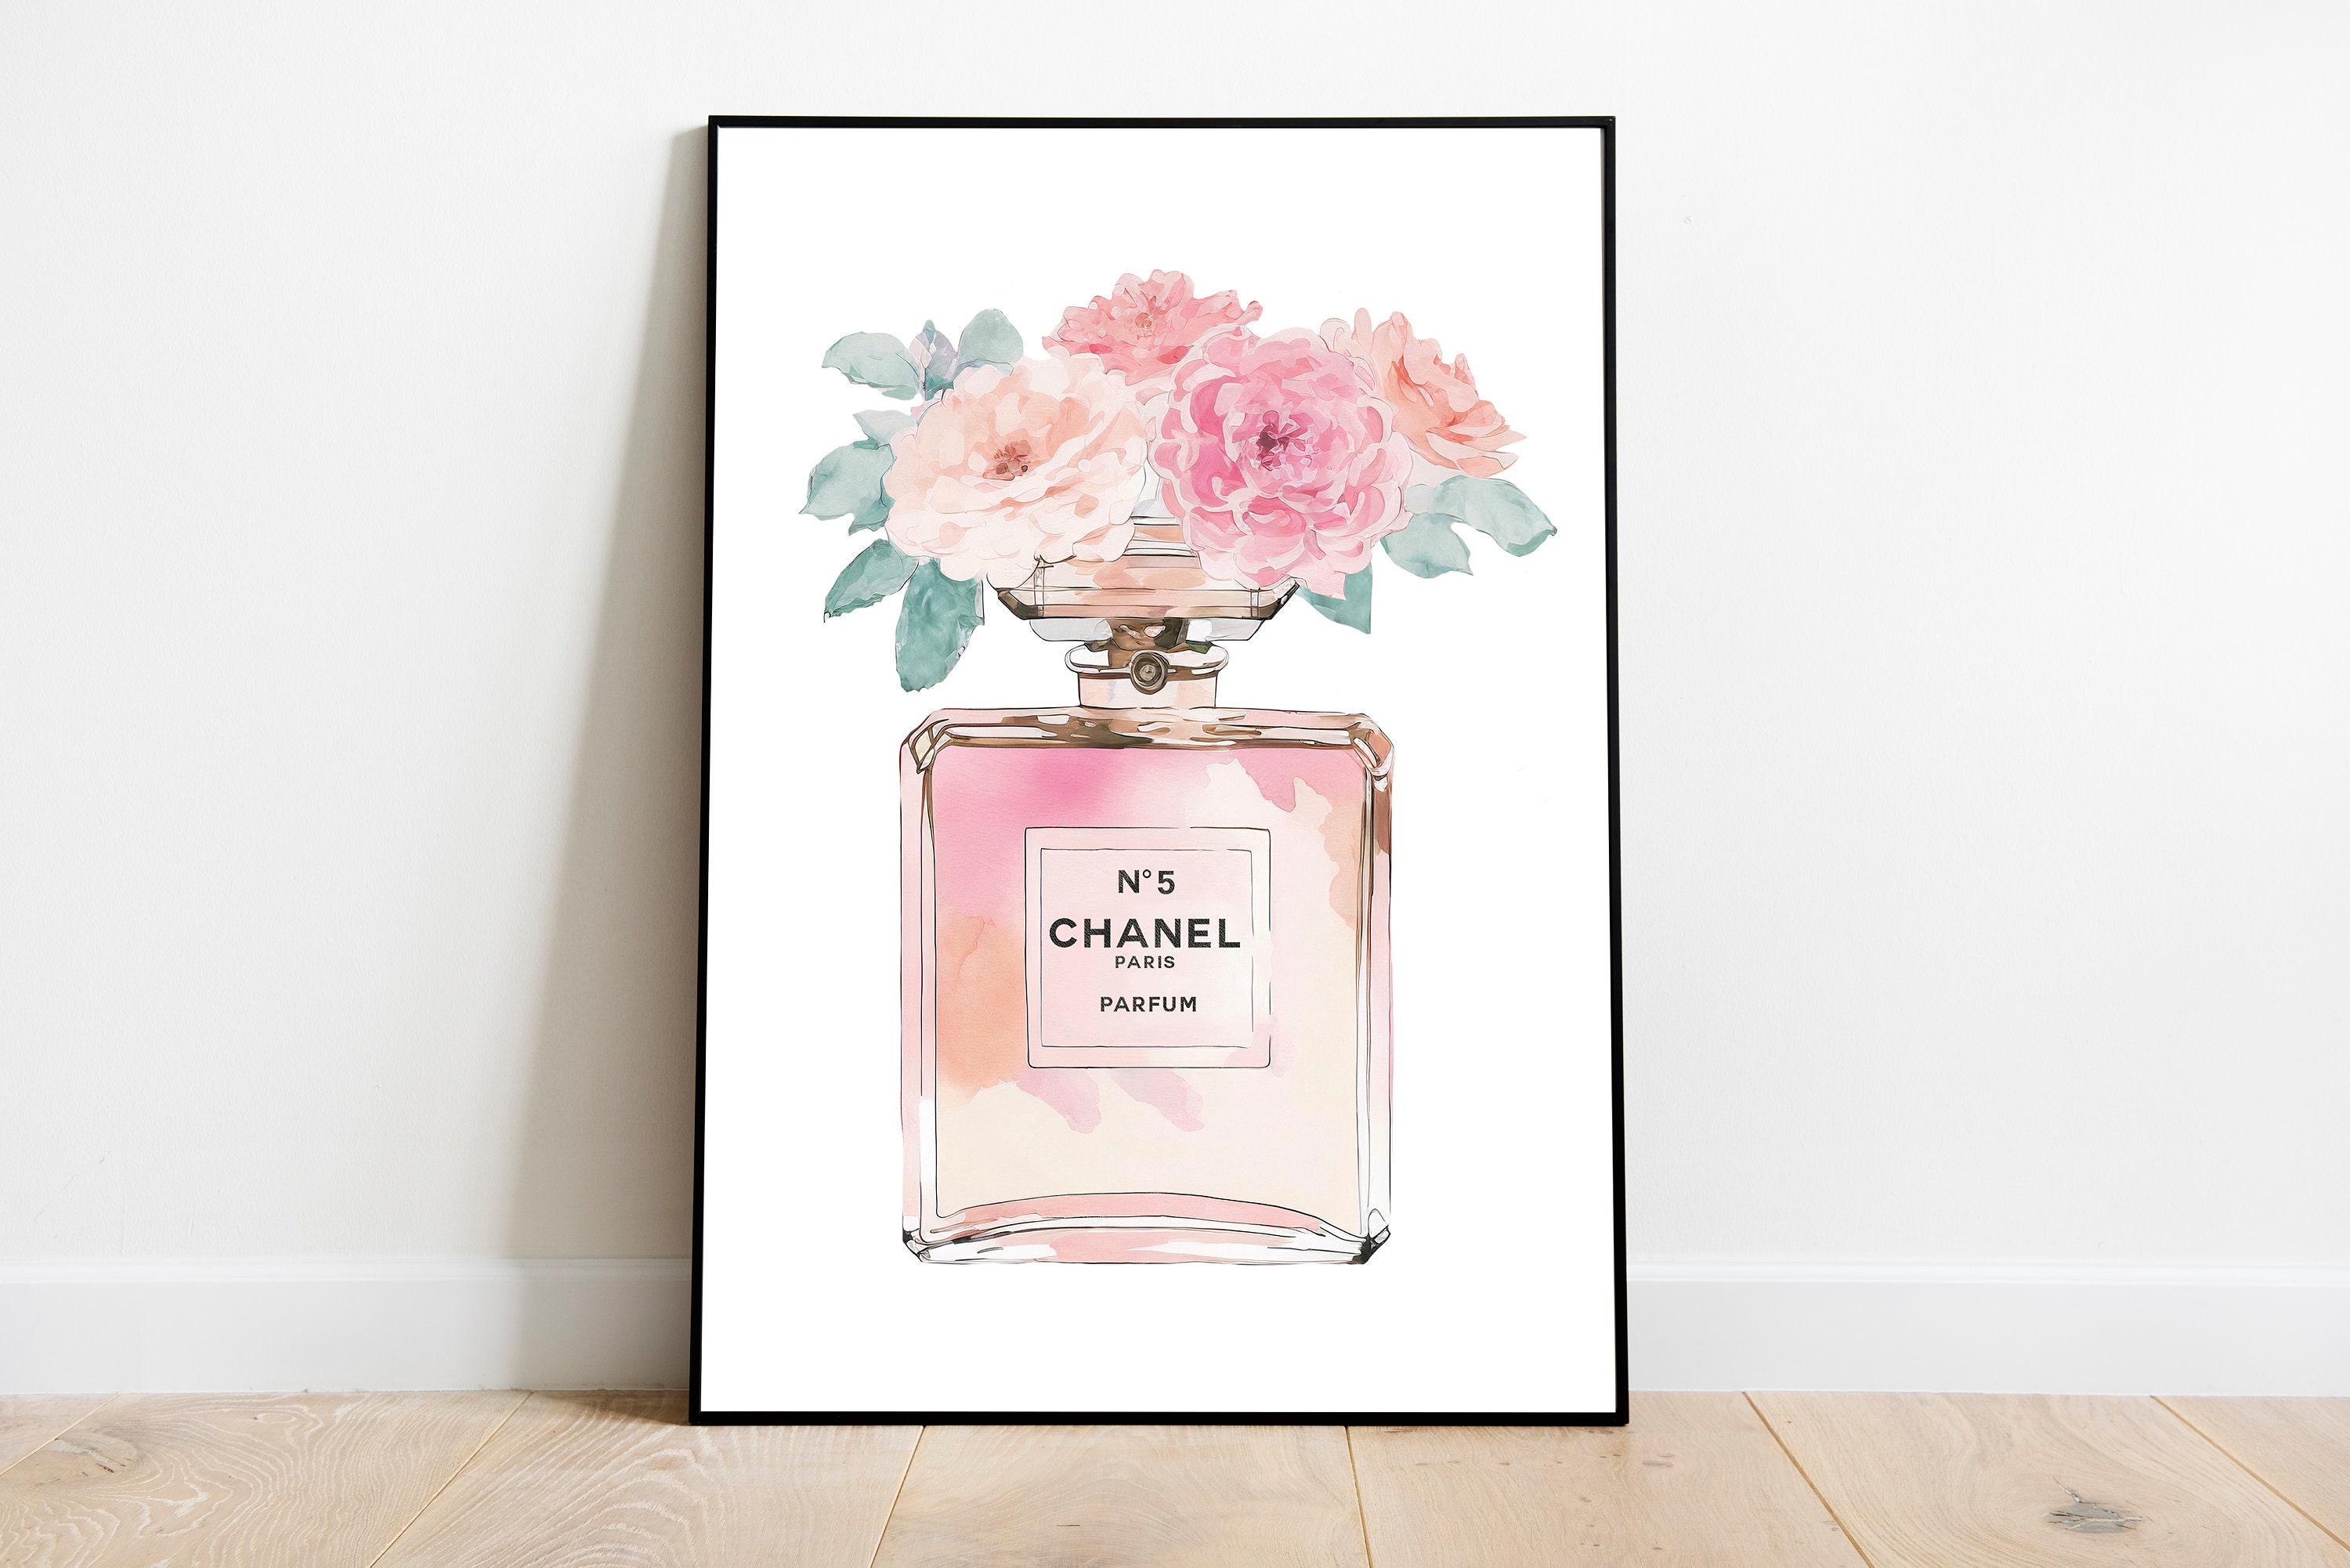 Buy Chanel Flower Bottle Online In India -  India